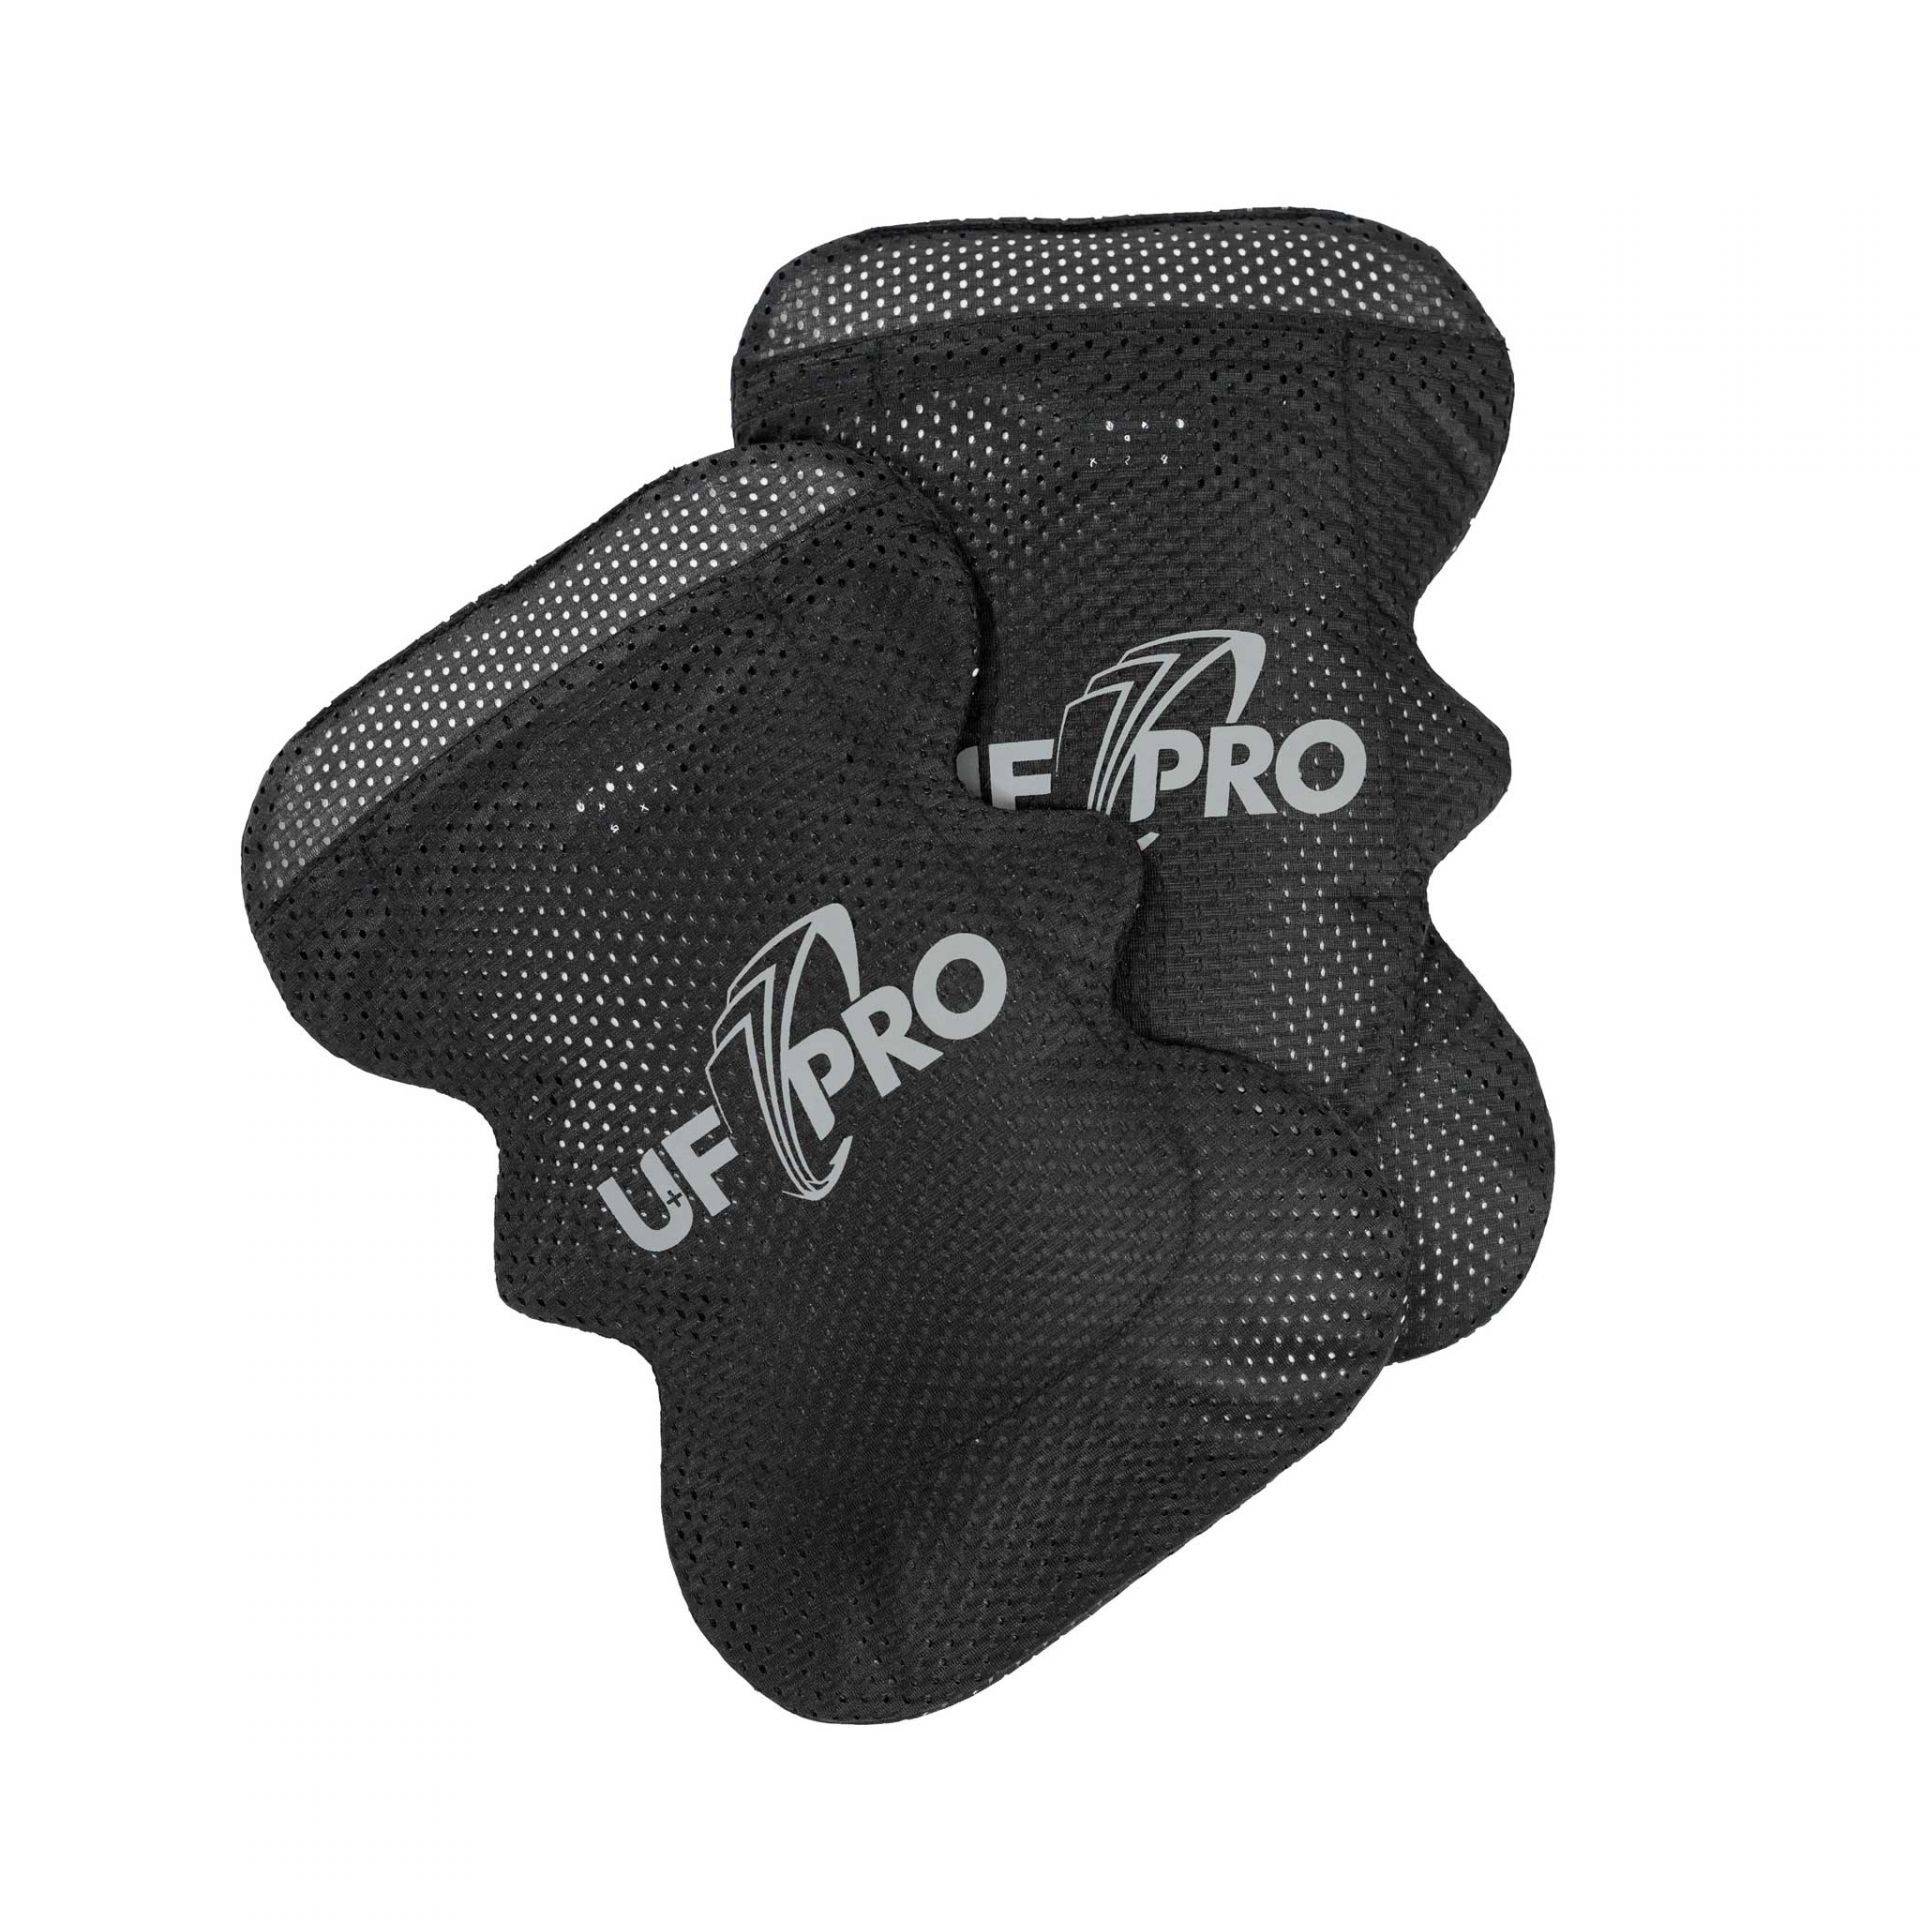 https://ufpro.com/storage/app/media/product-catalog/accessories/thumb/1920x1920.crop/3d-tactical-knee-pads-CUSHION-hero.jpeg